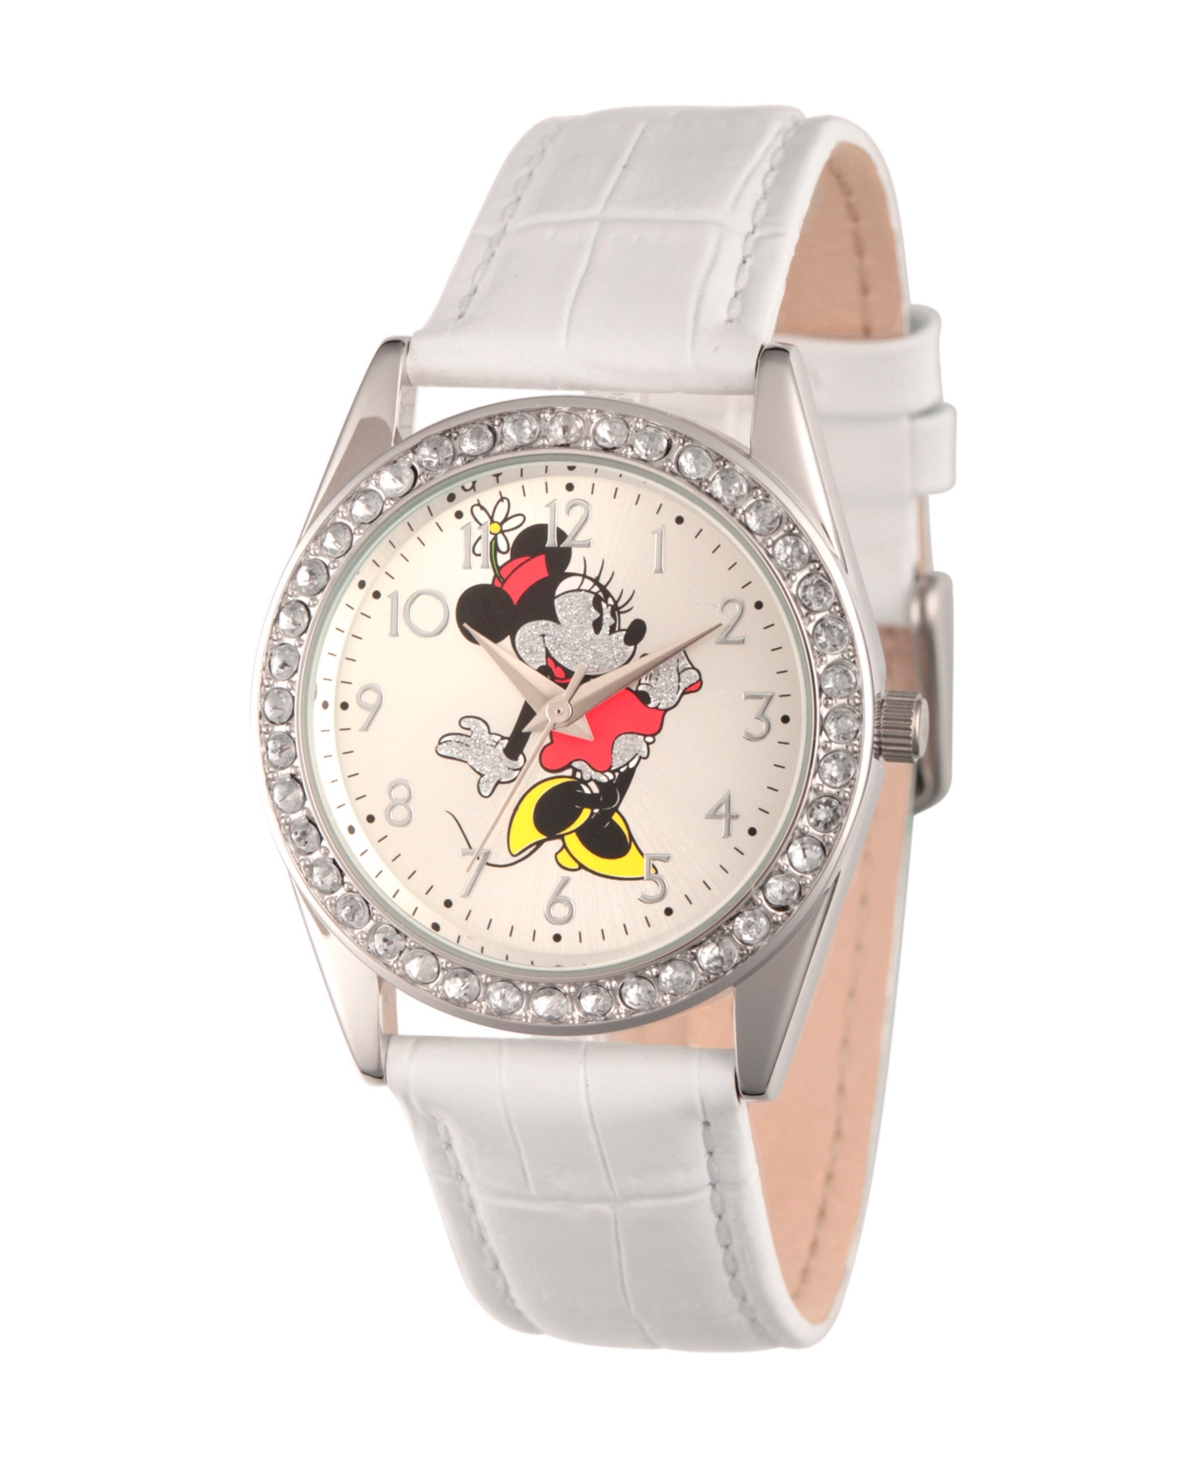 Ewatchfactory Disney Minnie Mouse Women's Silver Alloy Glitz Watch